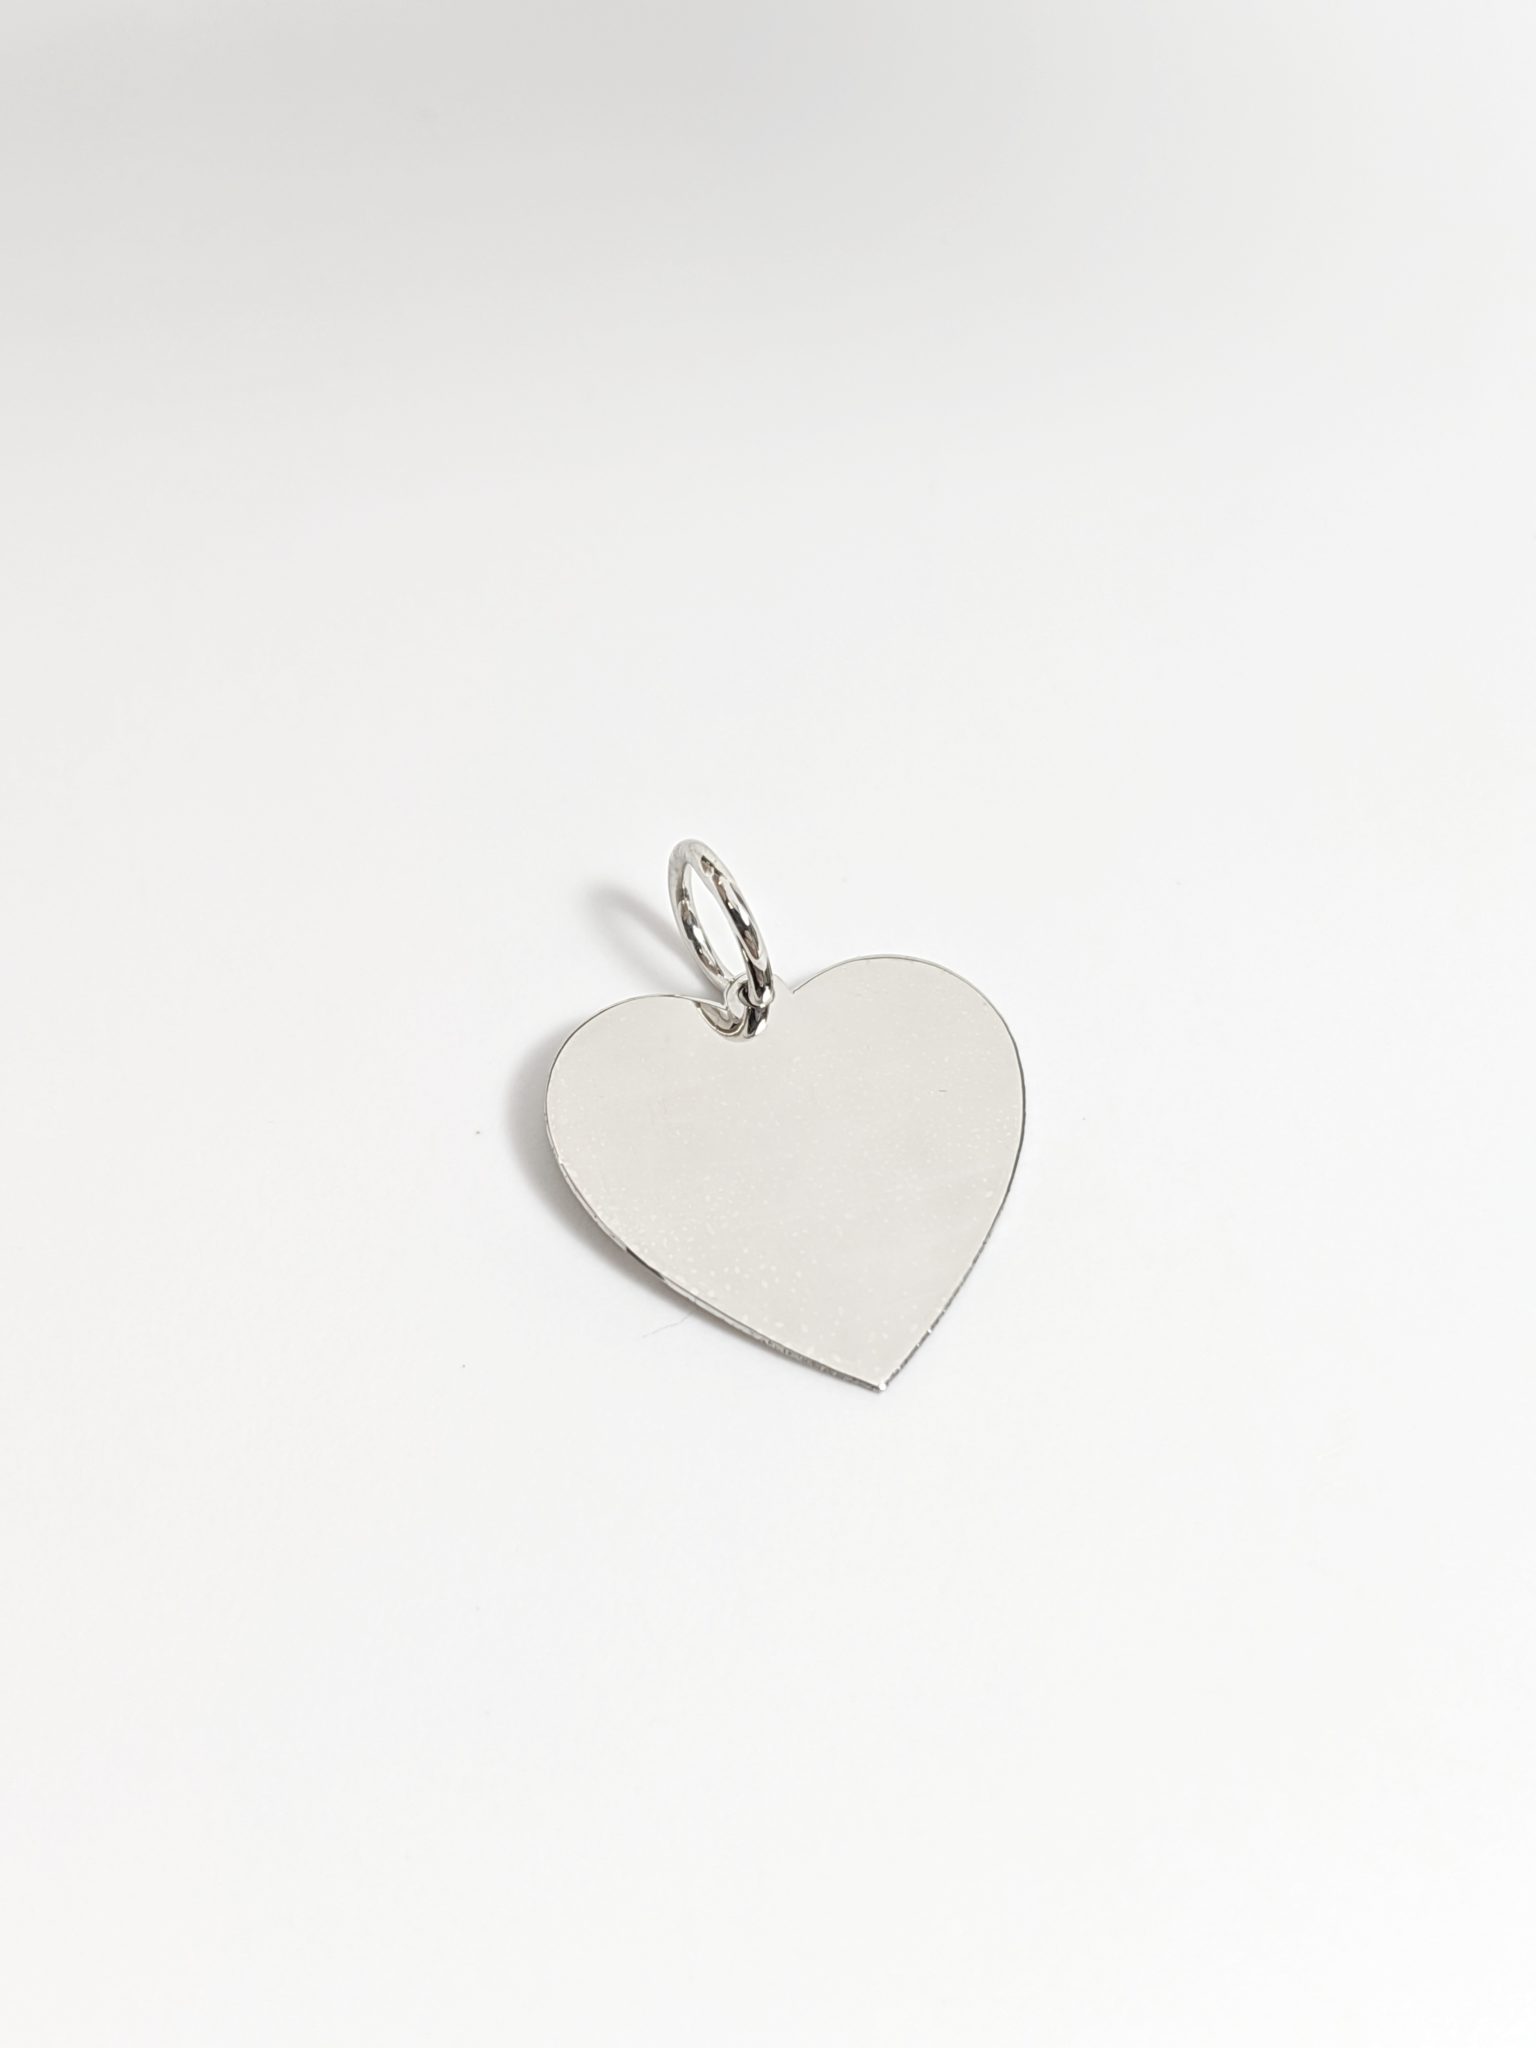 14K Tiffany Heart White Gold Disk Pendant Engrave Engravable Flat Heart Charm Finger Print Custom Customized Love Gifts For Her Front Side